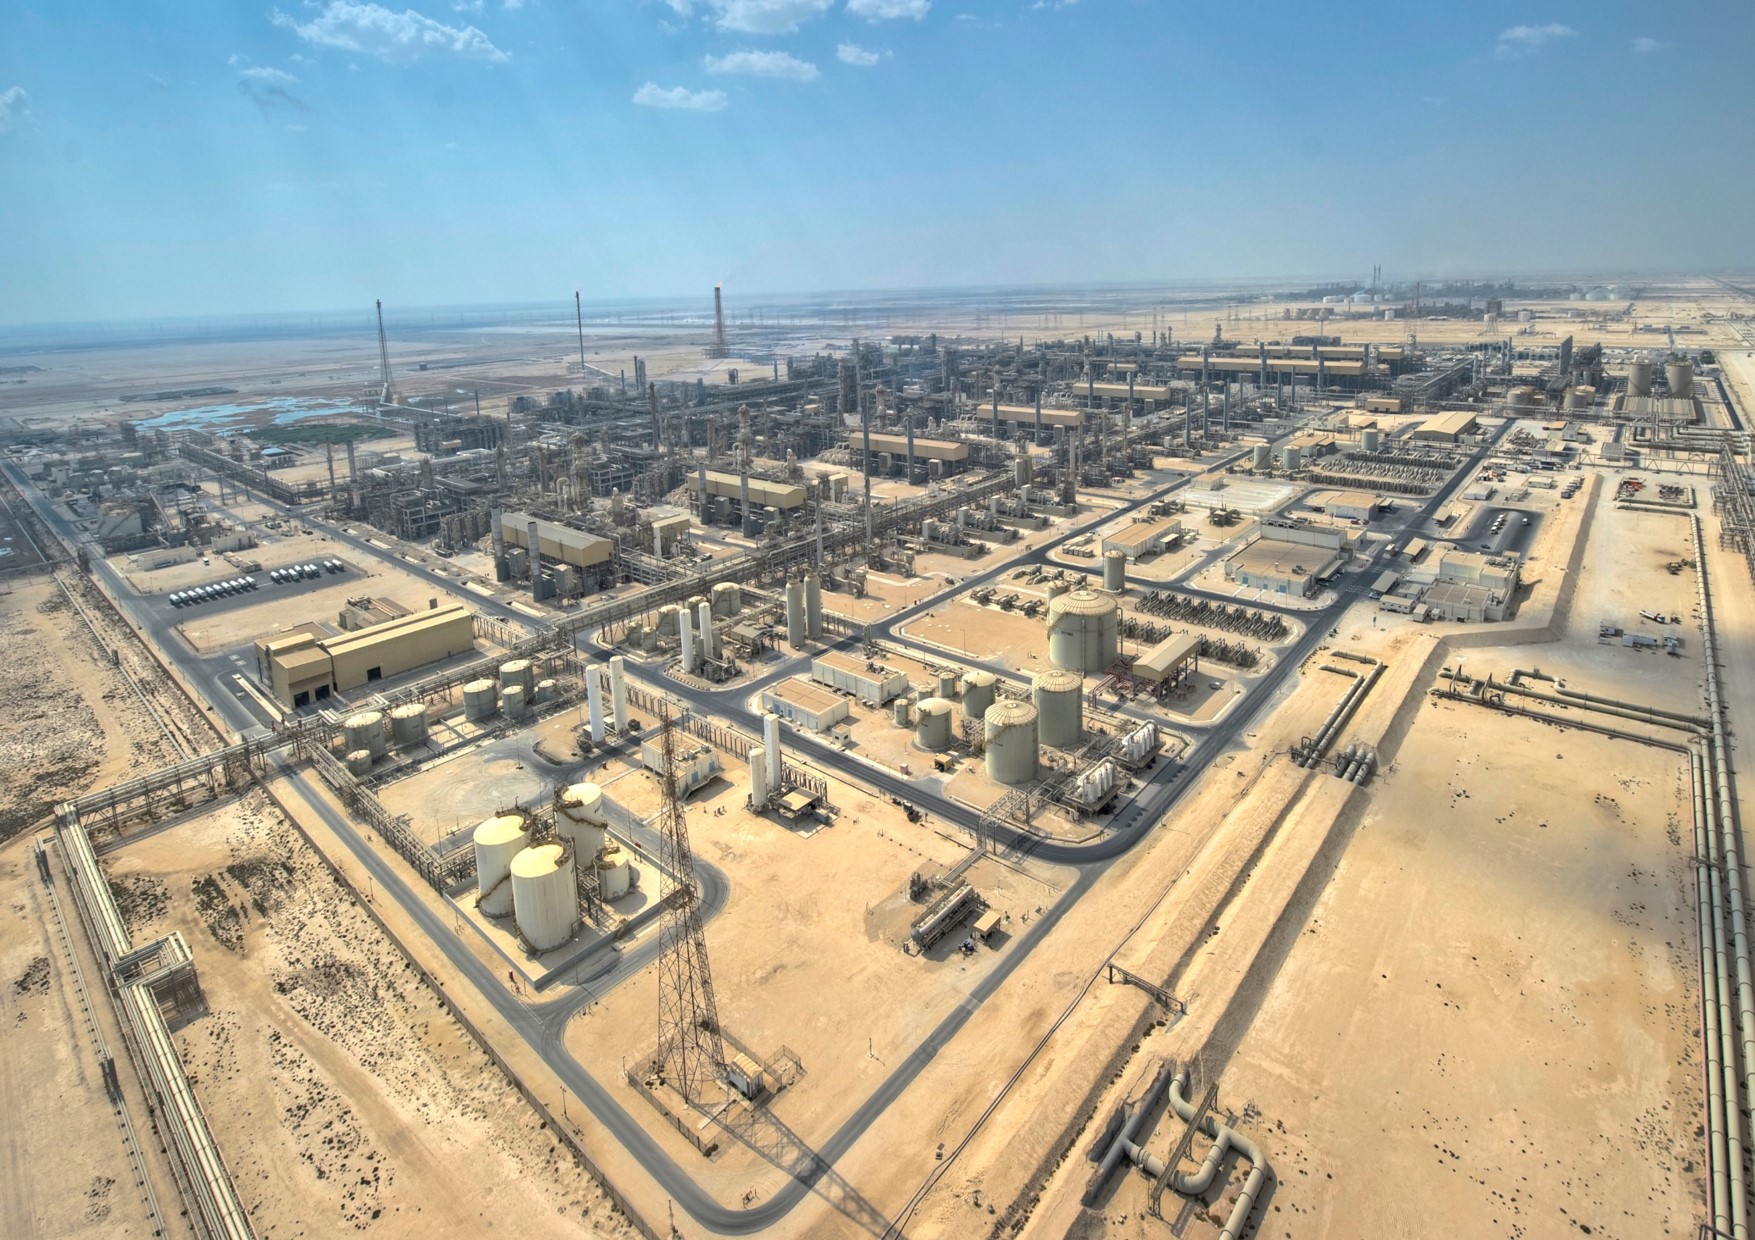 Qatar Petroleum plans big bond sale to fund LNG expansion